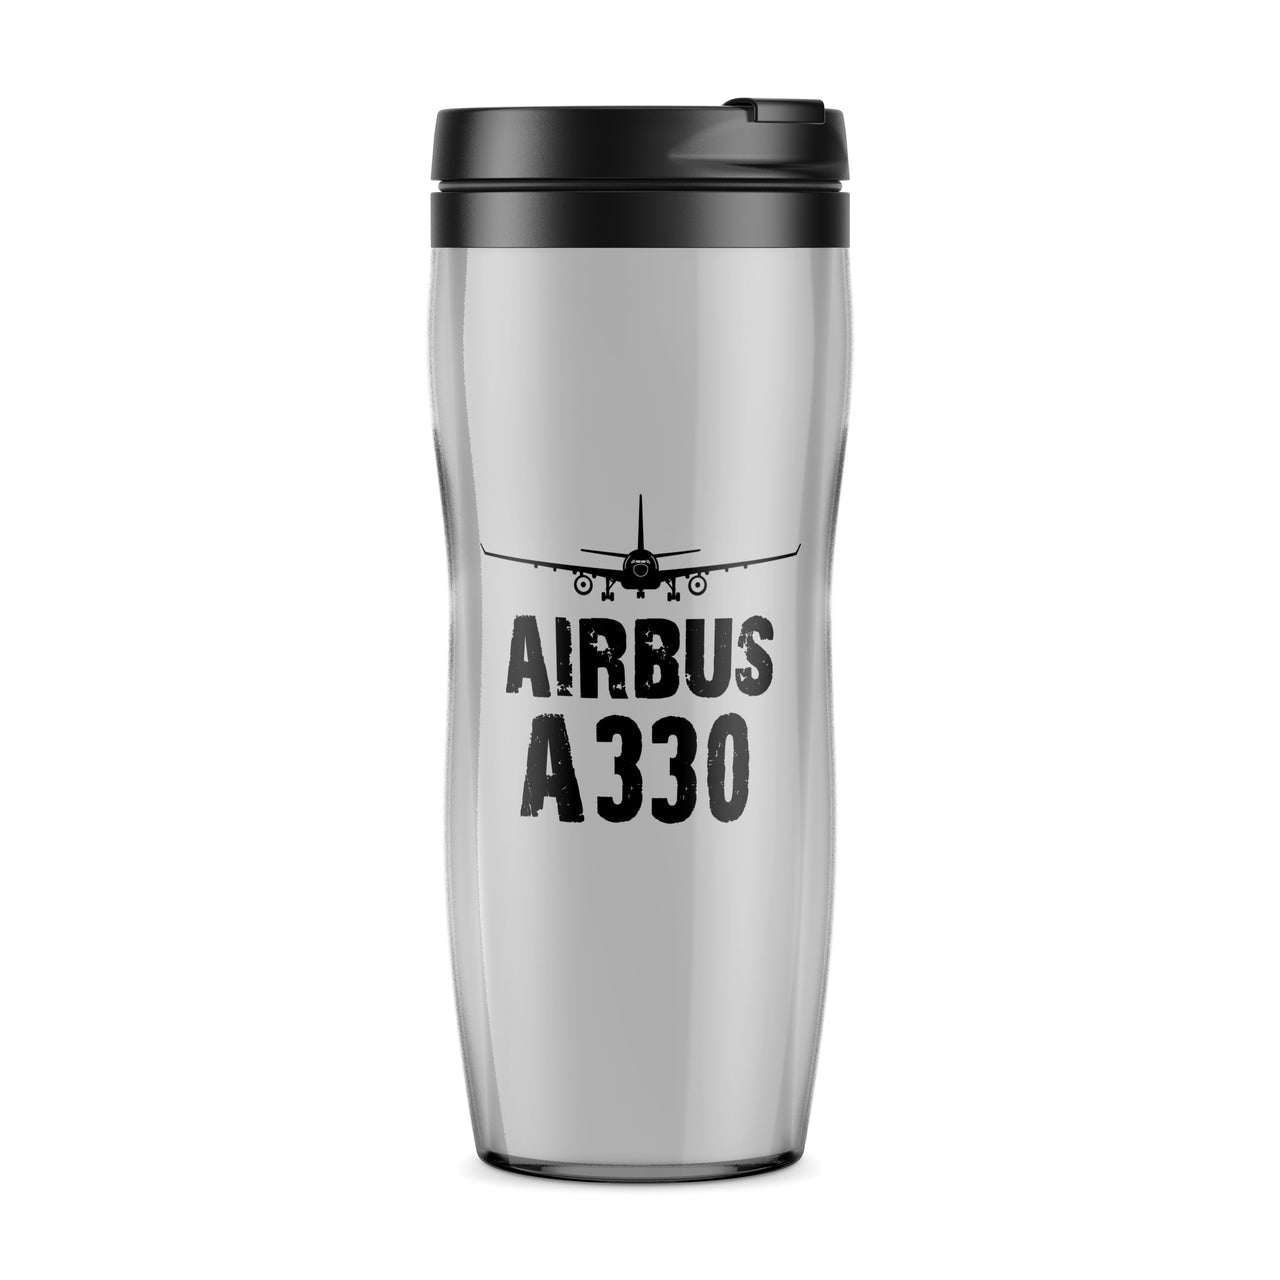 Airbus A330 & Plane Designed Travel Mugs